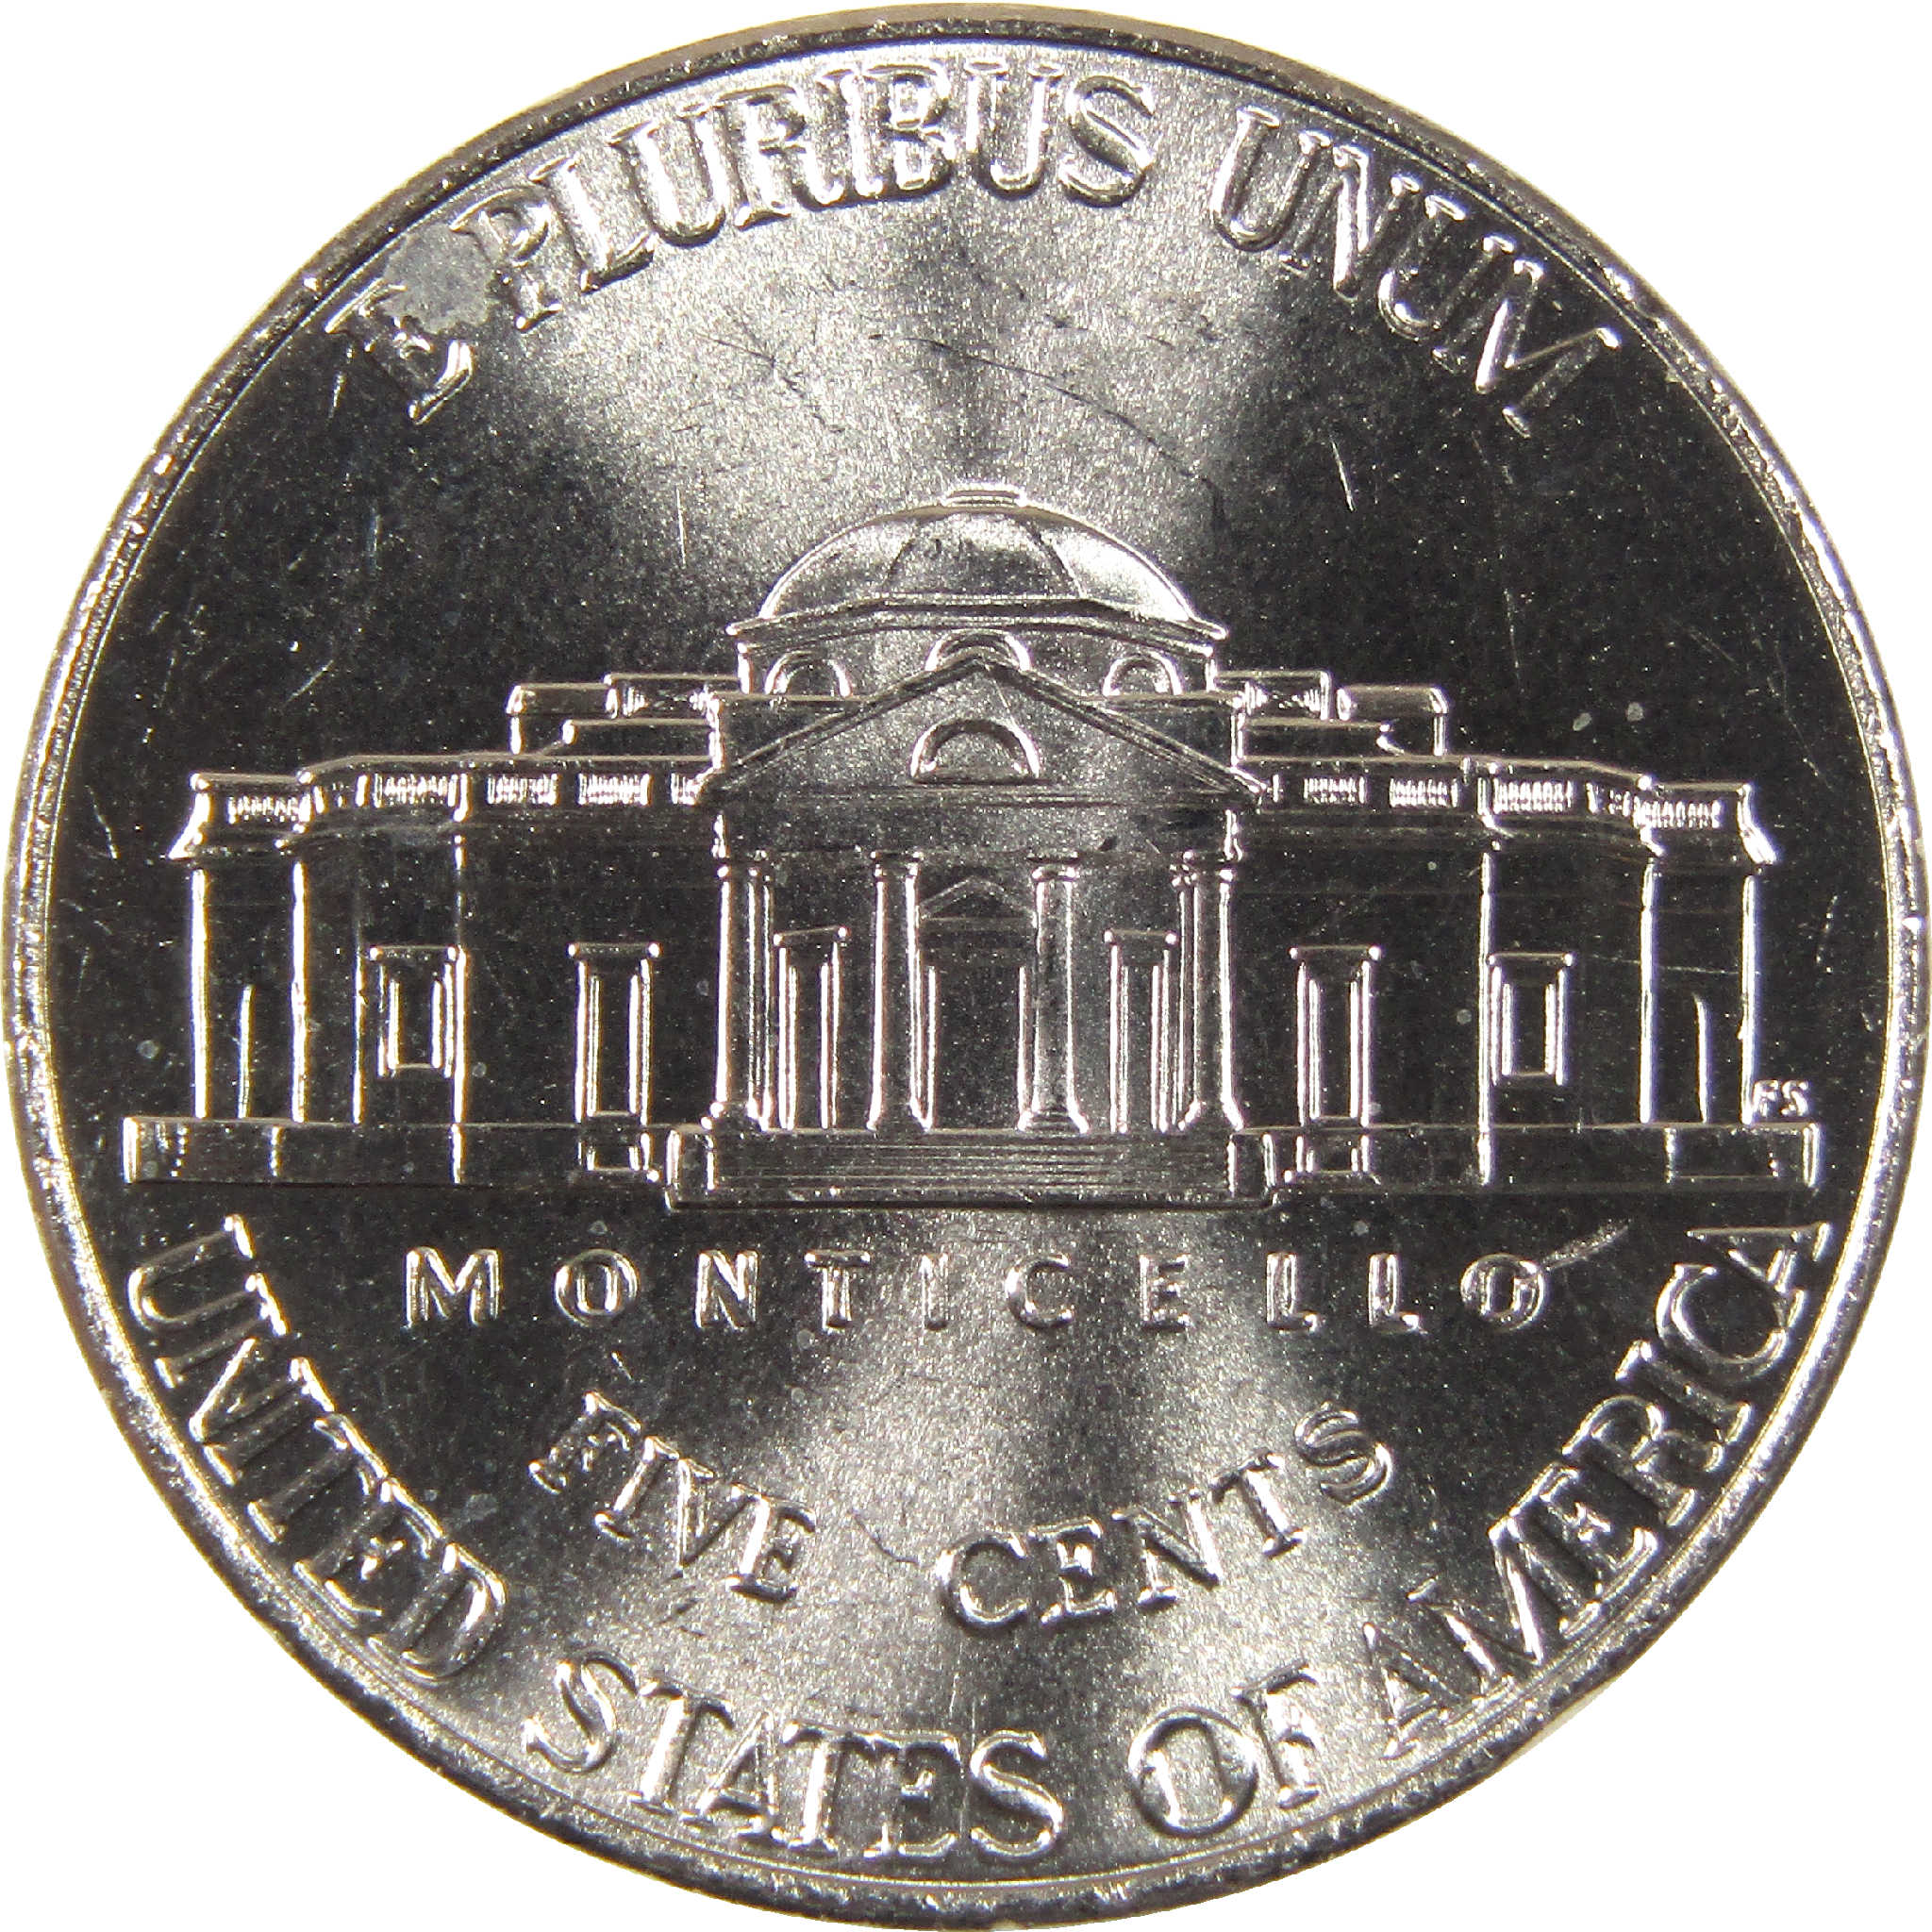 2016 D Jefferson Nickel BU Uncirculated 5c Coin